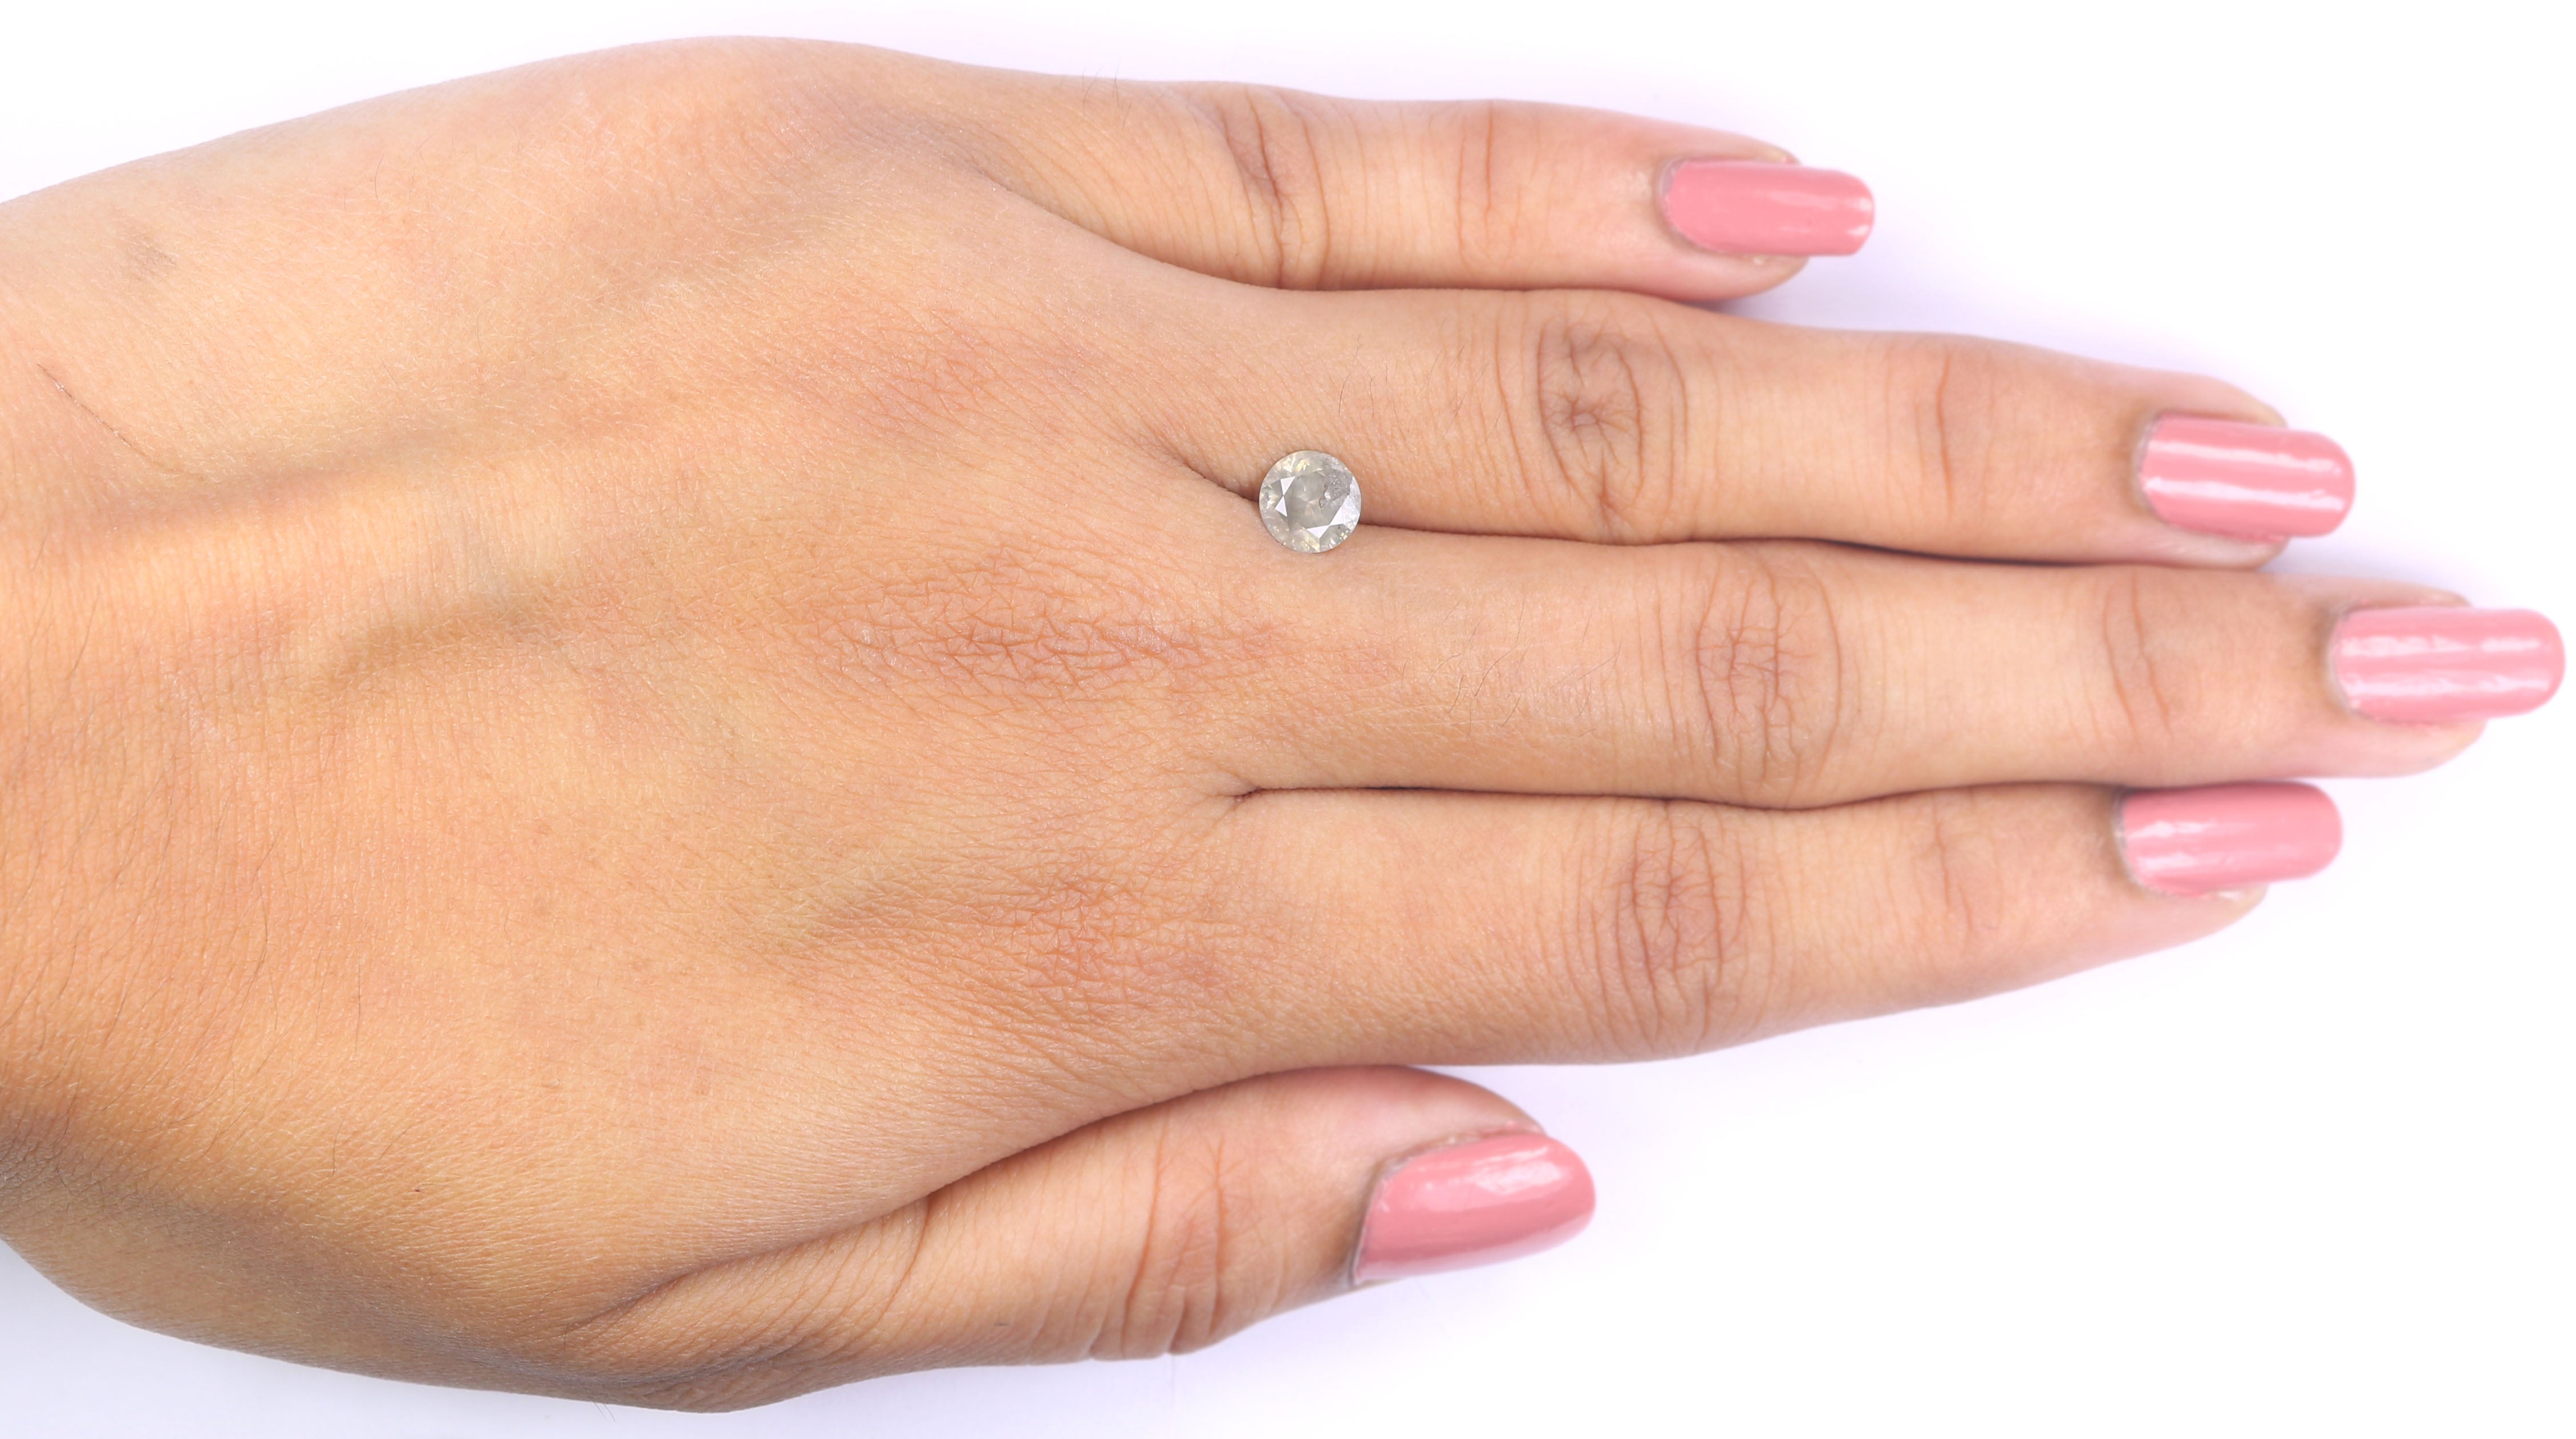 Natural Loose Round Brilliant Cut Grey Color Diamond 0.79 CT 5.90 MM Round Shape Diamond KR1779